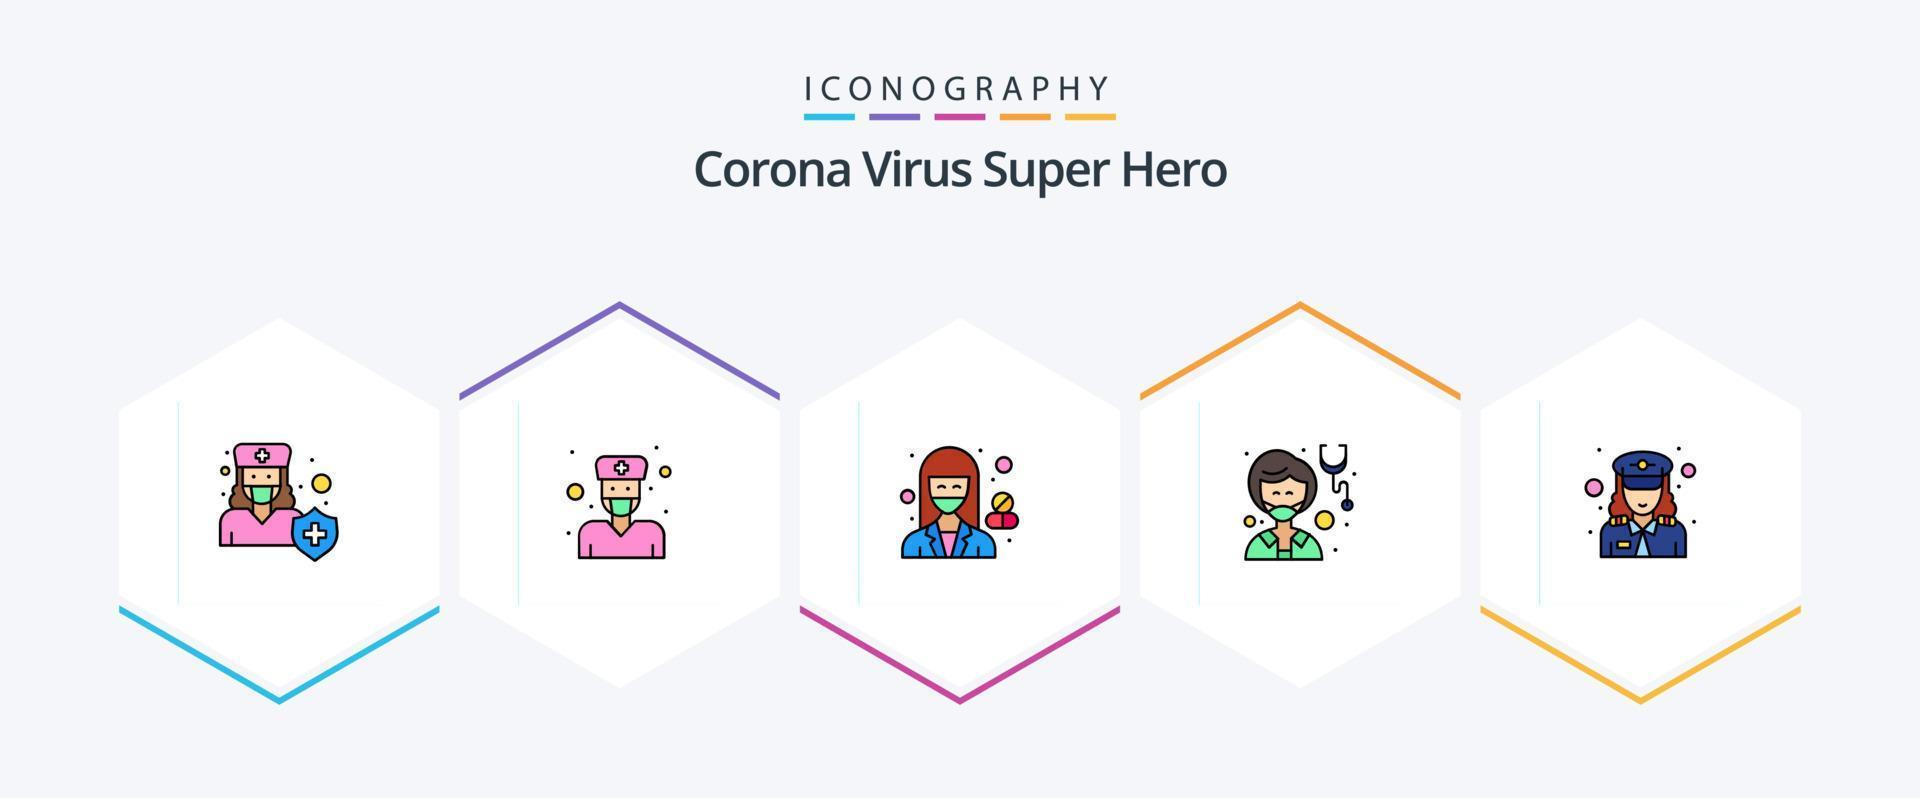 corona vírus super herói 25 linha preenchida ícone pacote Incluindo remédio. avatar. médico. farmacêutico. hospital vetor